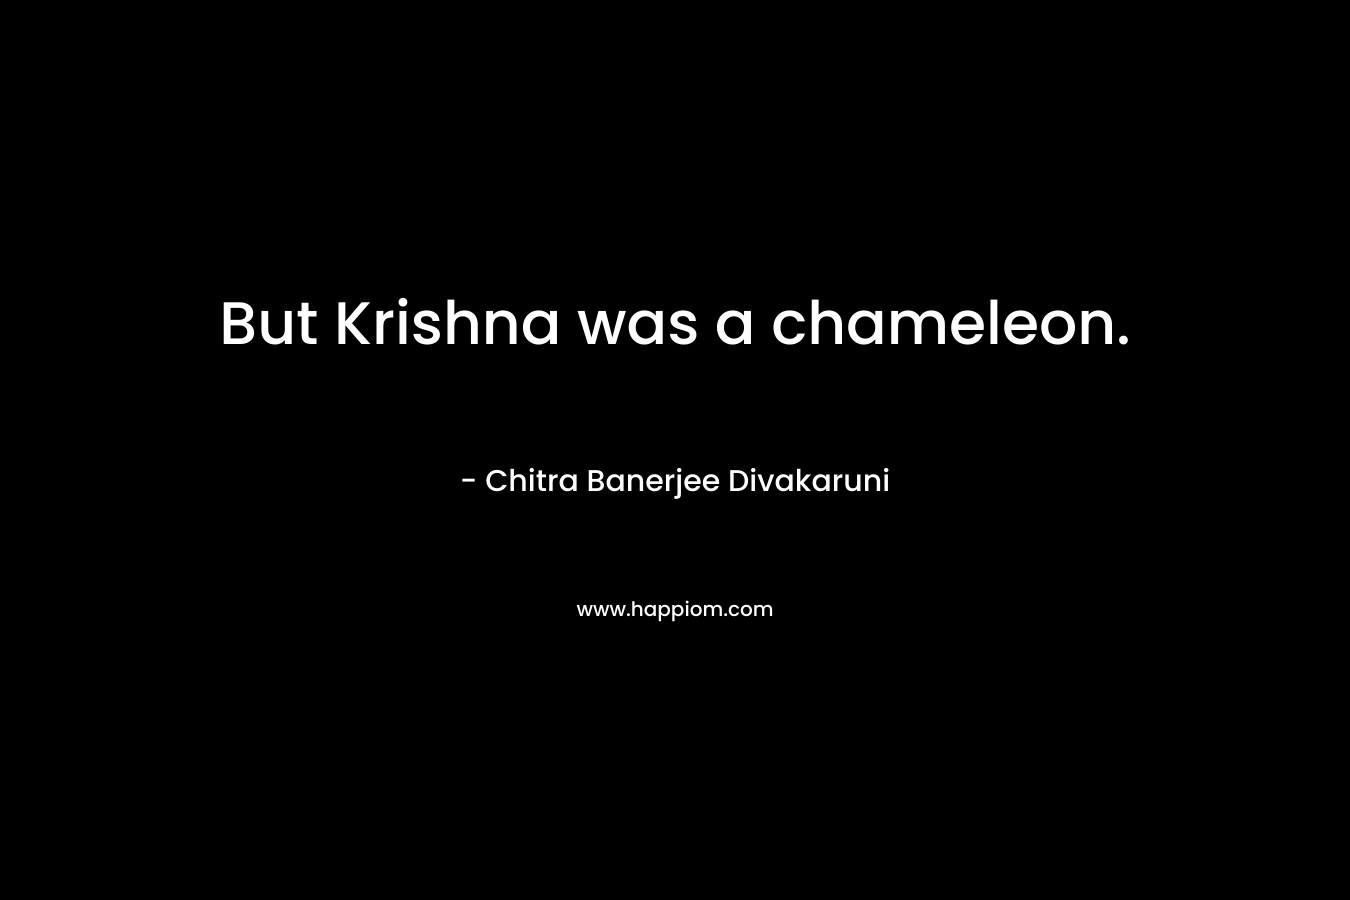 But Krishna was a chameleon.